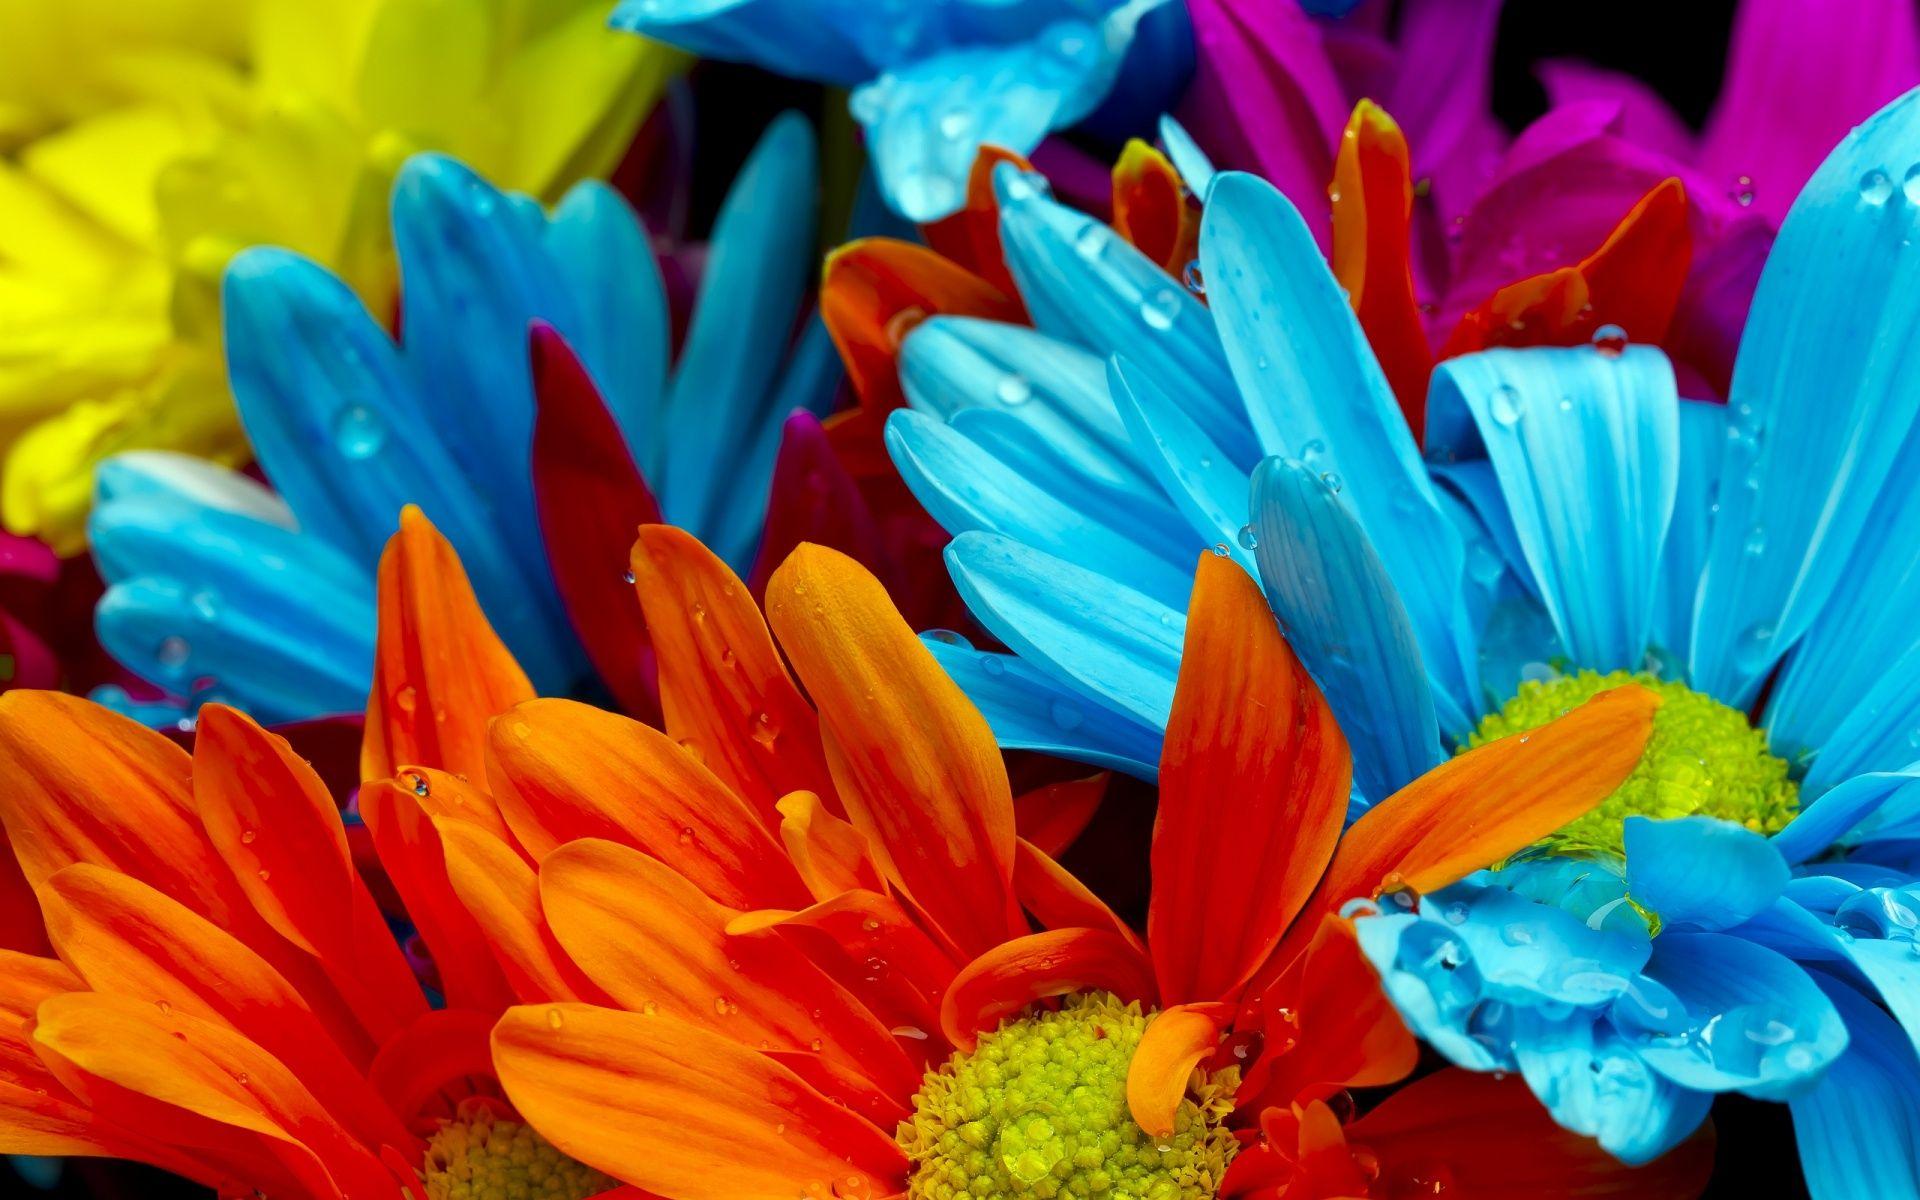 Best Flowers Wallpaper: Lovely Colorful Flowers 846220 Flowers